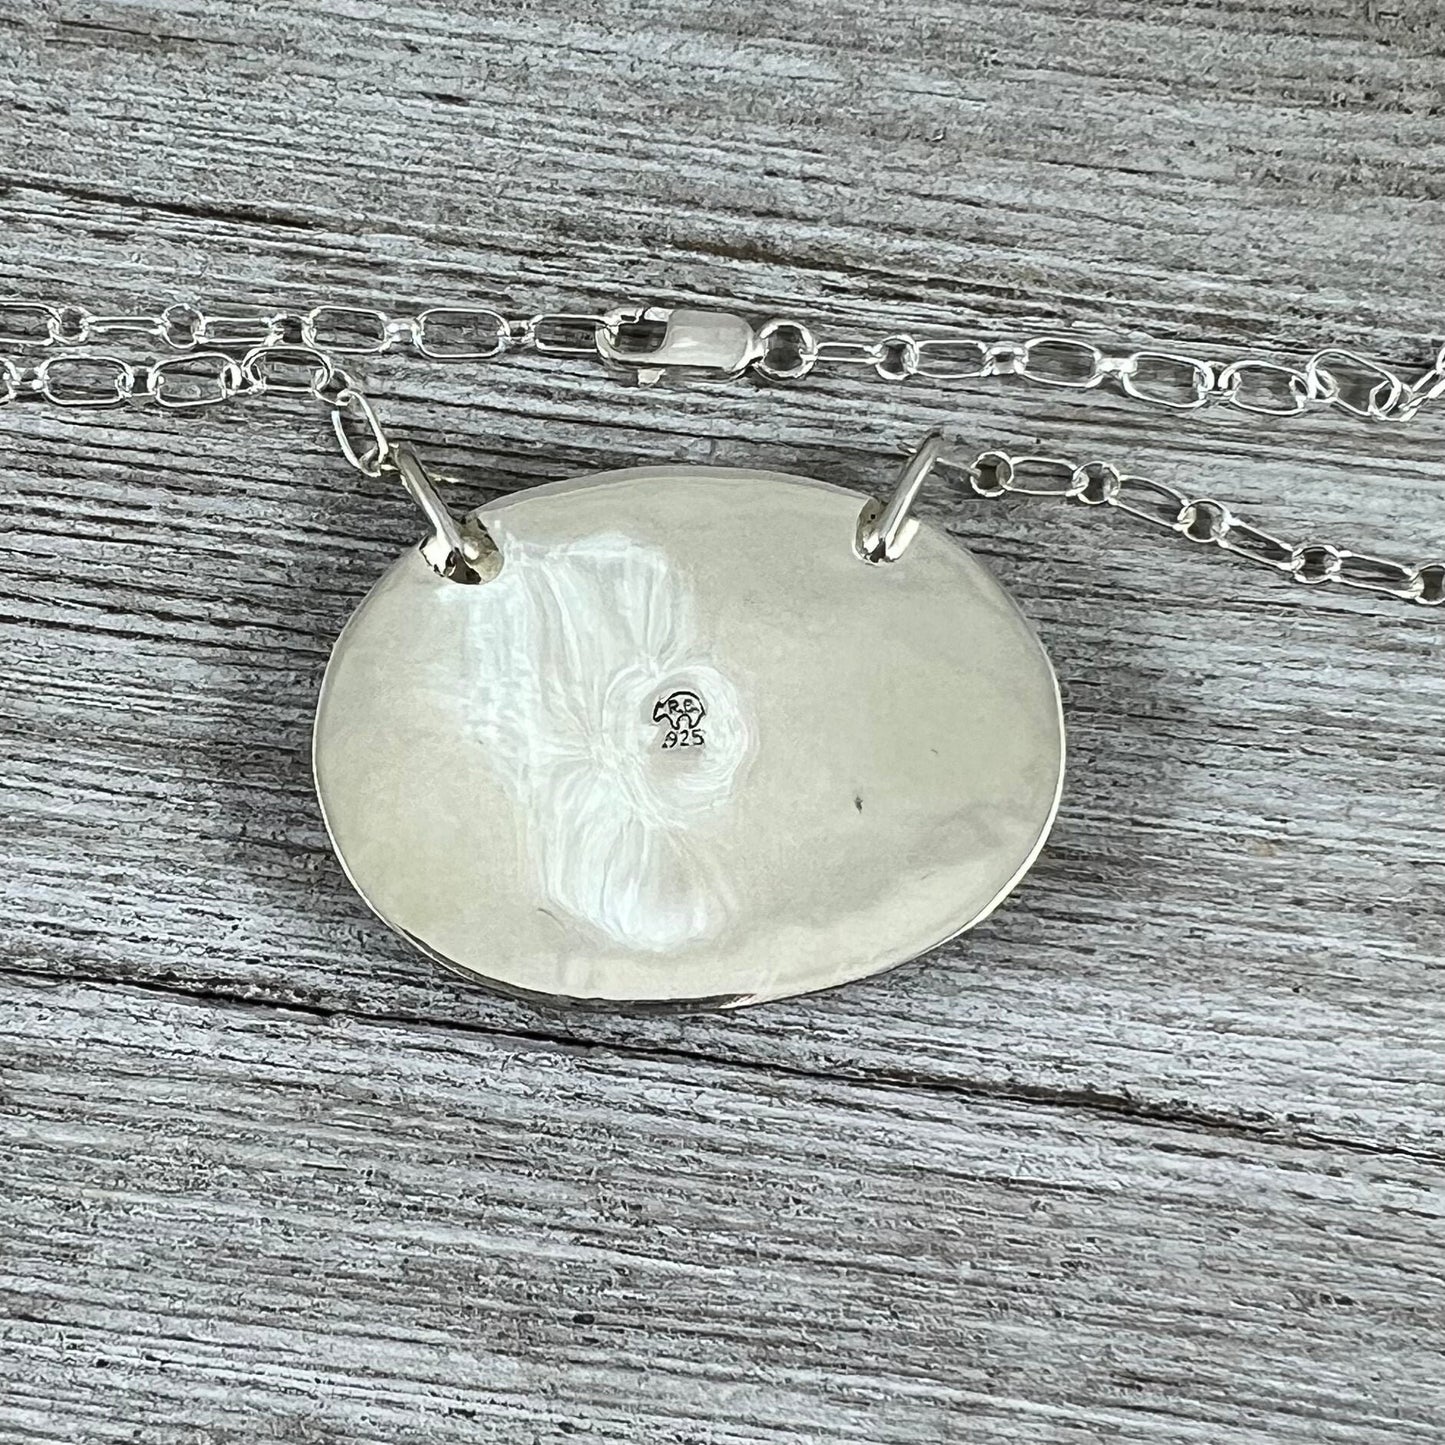 Kingman Turquoise oval Fixed pendant necklace, 17 1/2" long, Navajo handmade, sterling silver choker